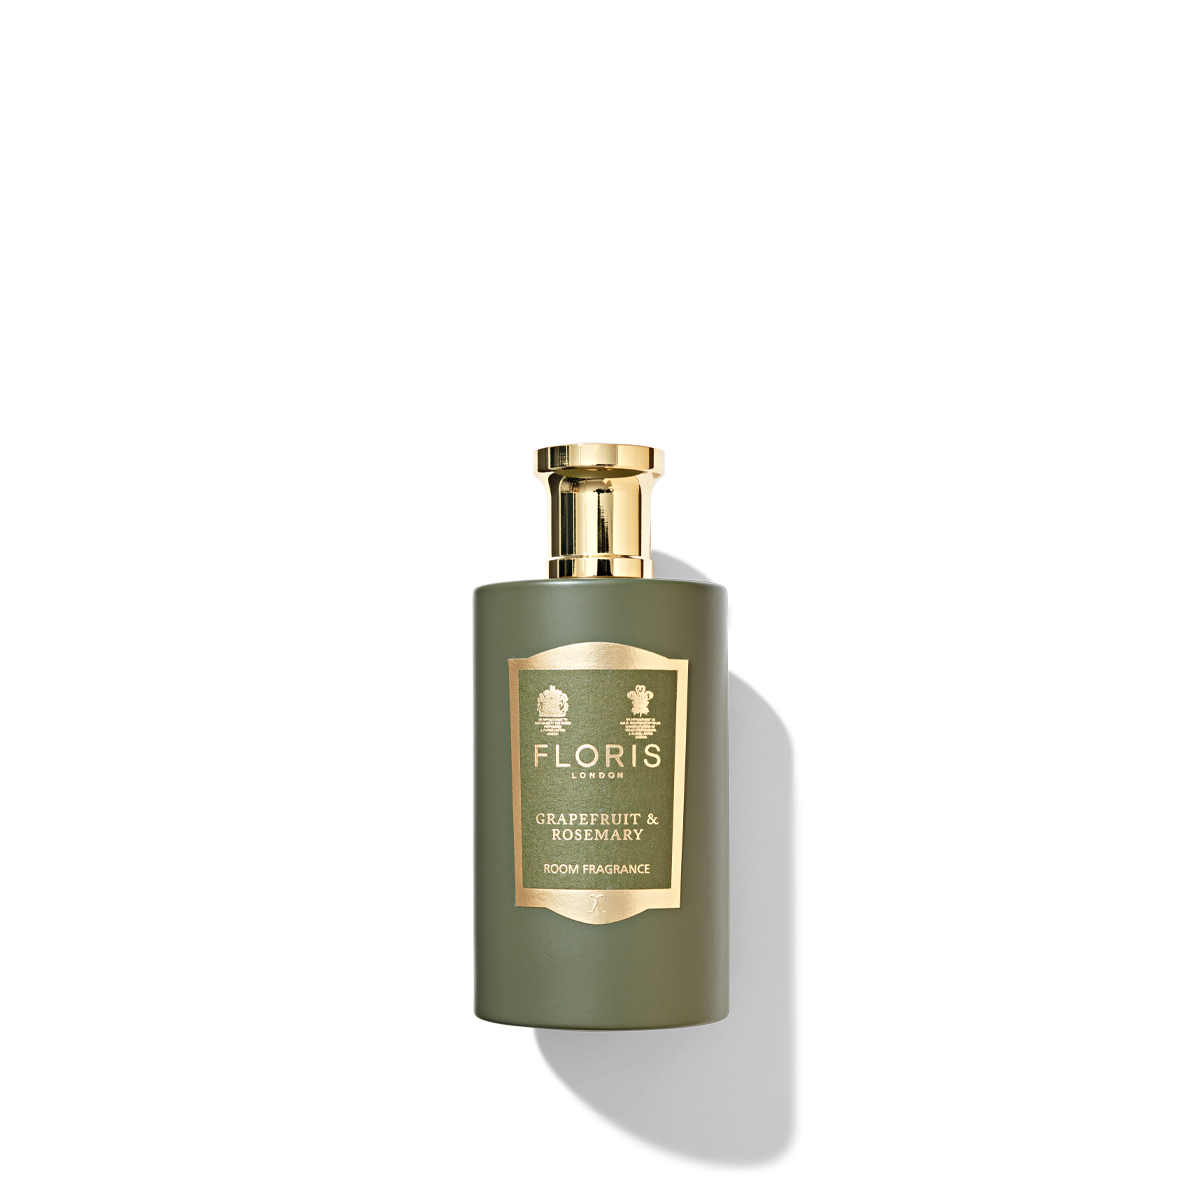 Green and gold room fragrance bottle for Grapefruit & Rosemary scent